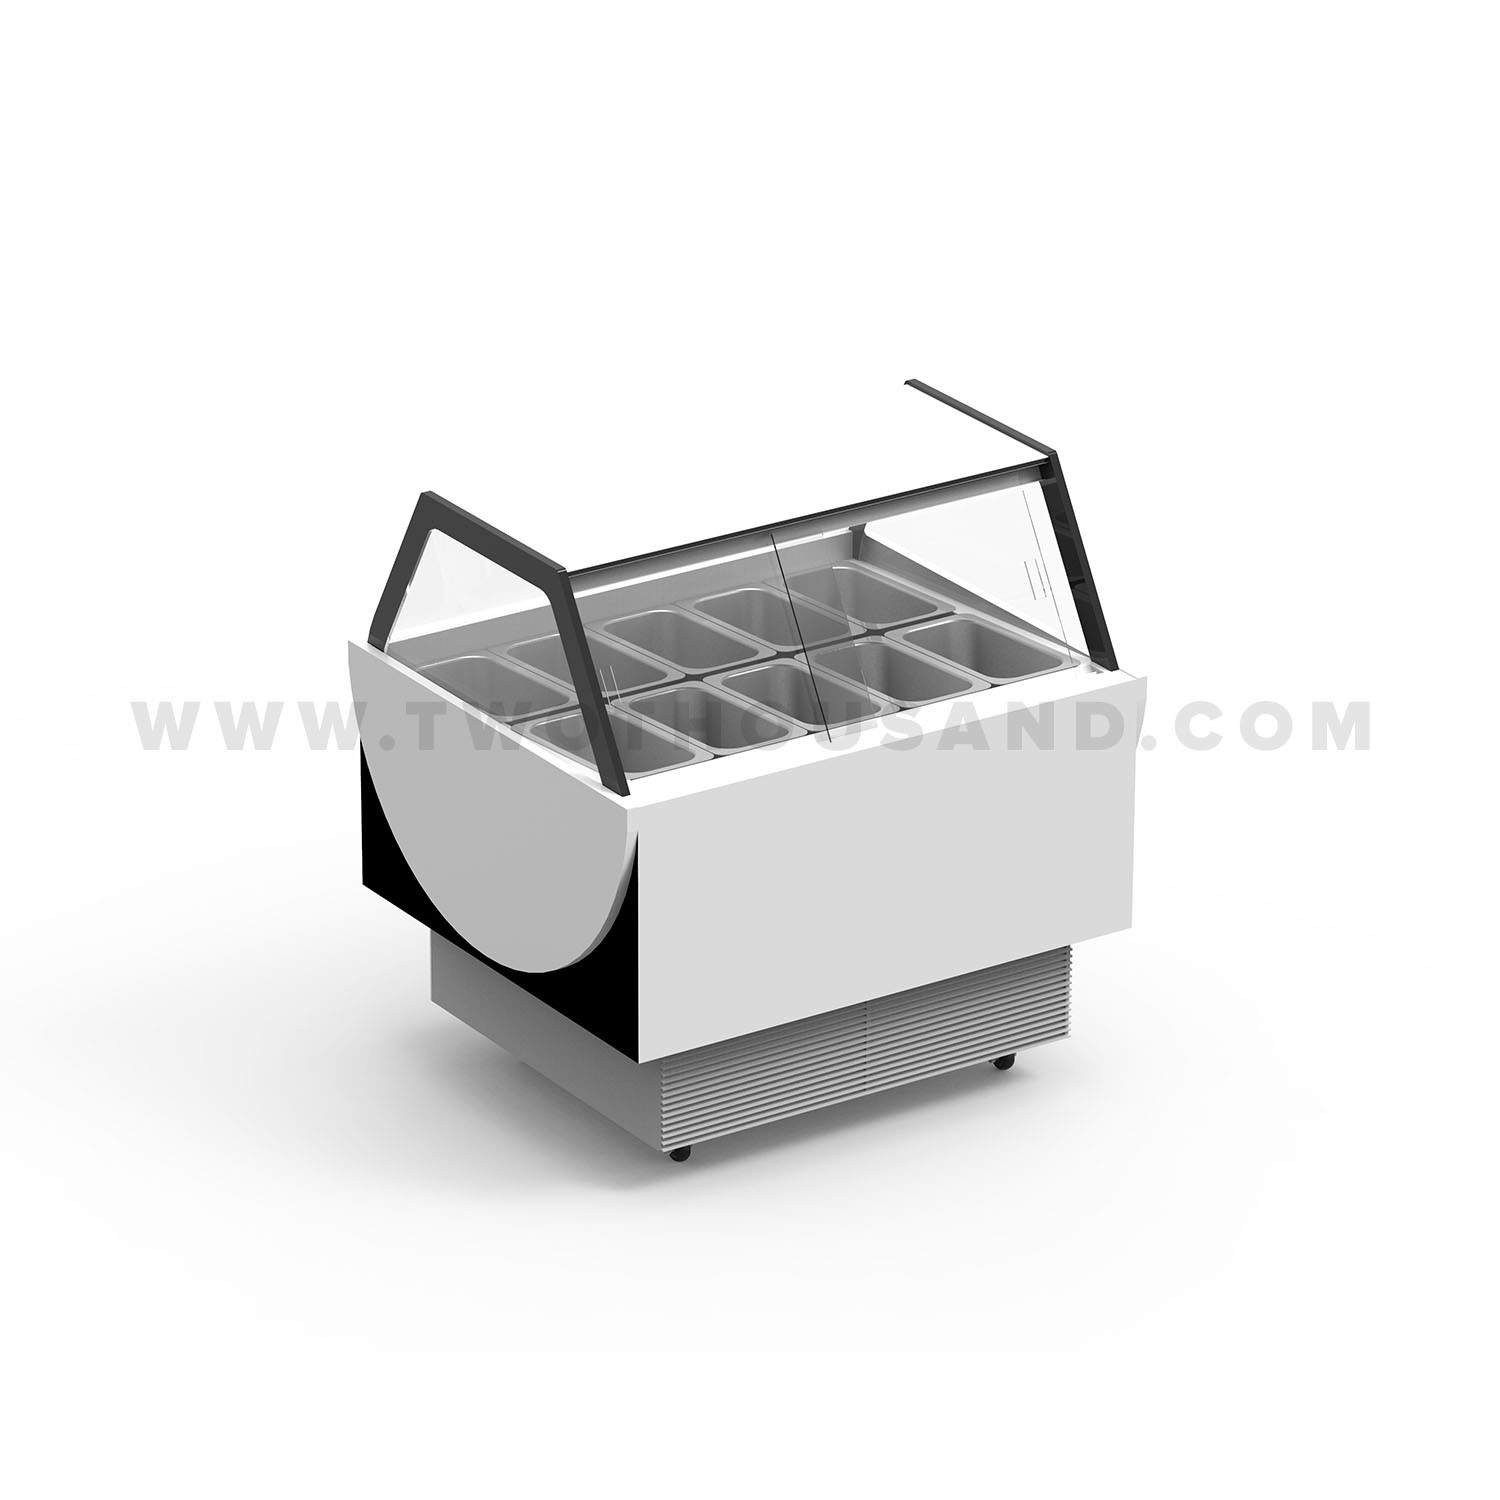 10 X 1 3 Gn Pan Ce Gelato Ice Cream Dipping Cabinet Gc Idb900